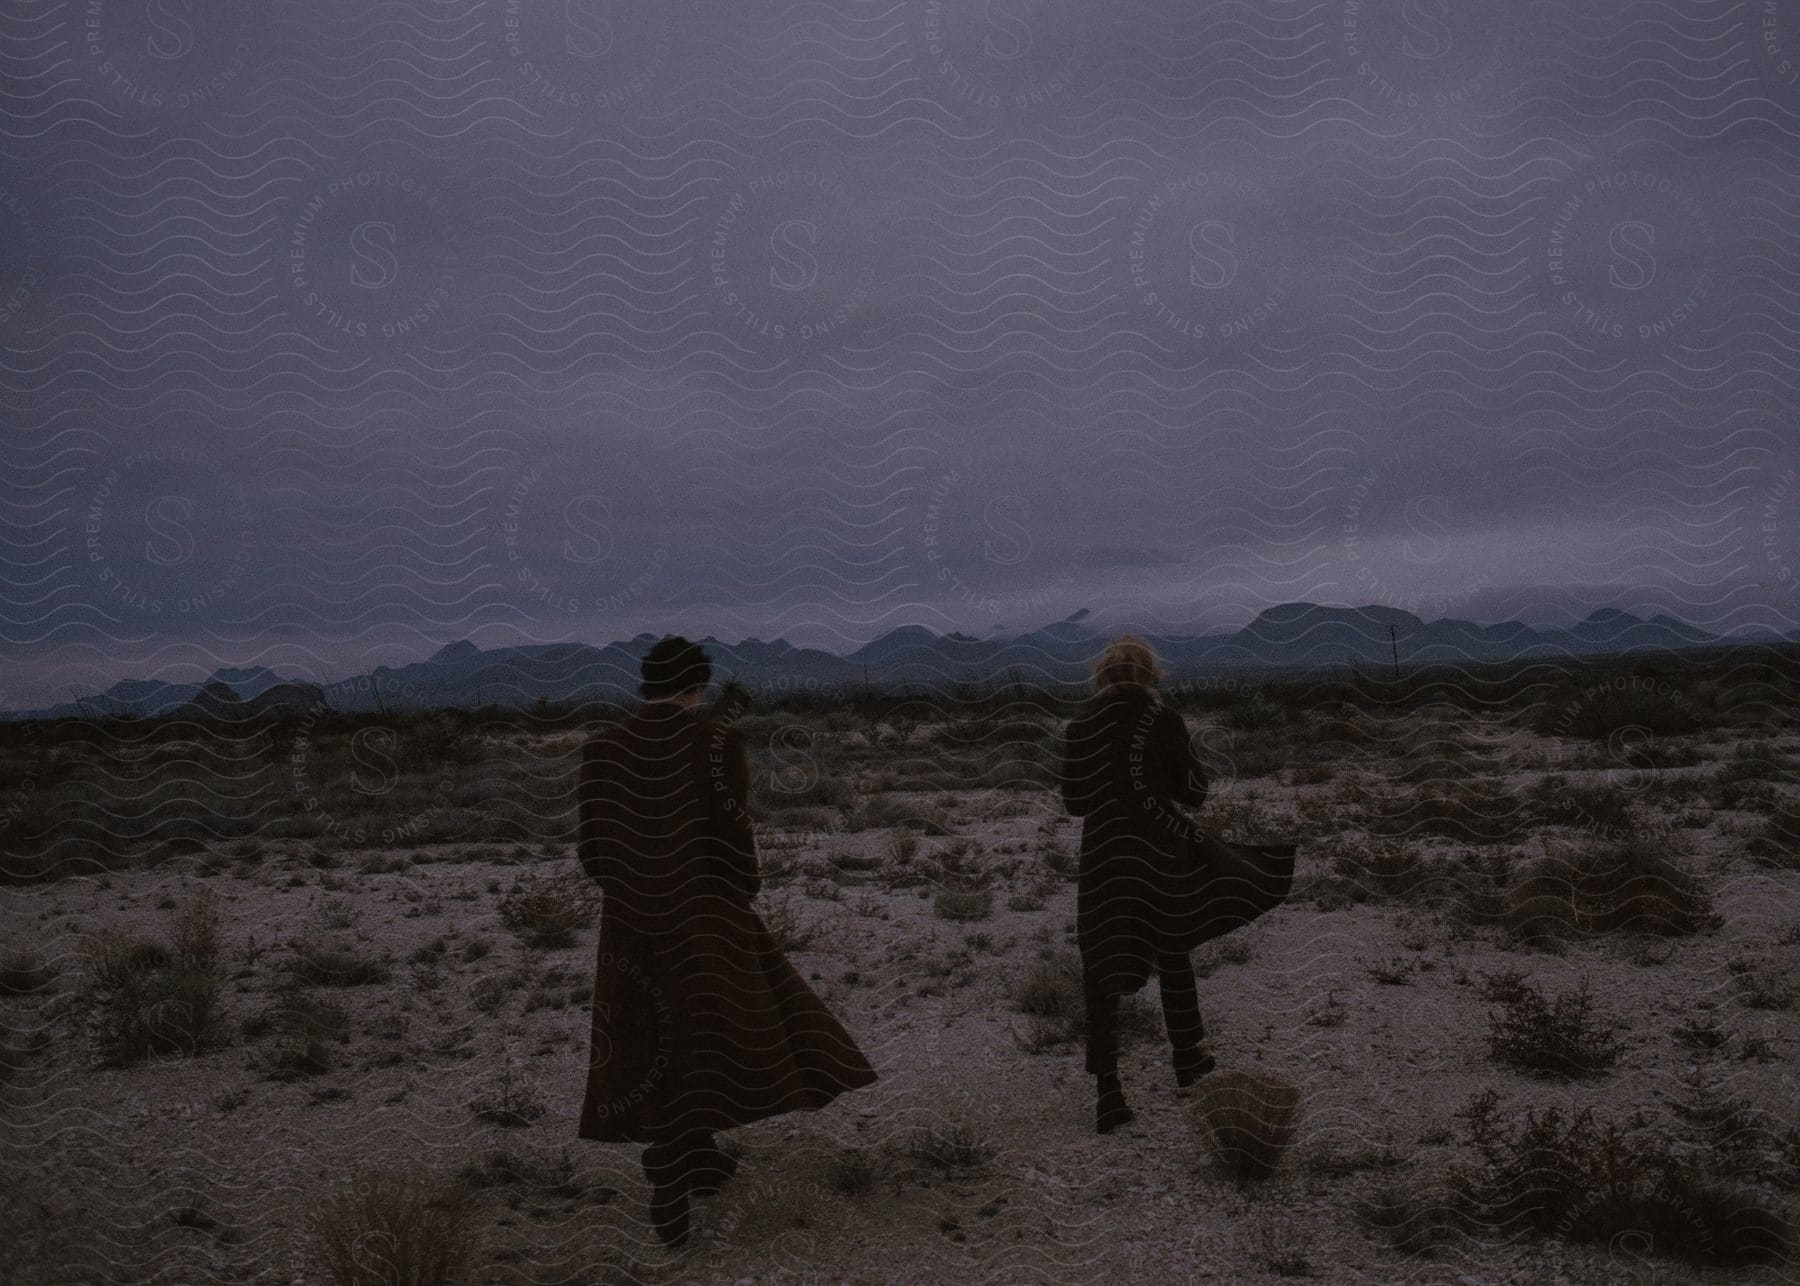 Man and woman walking through a desert